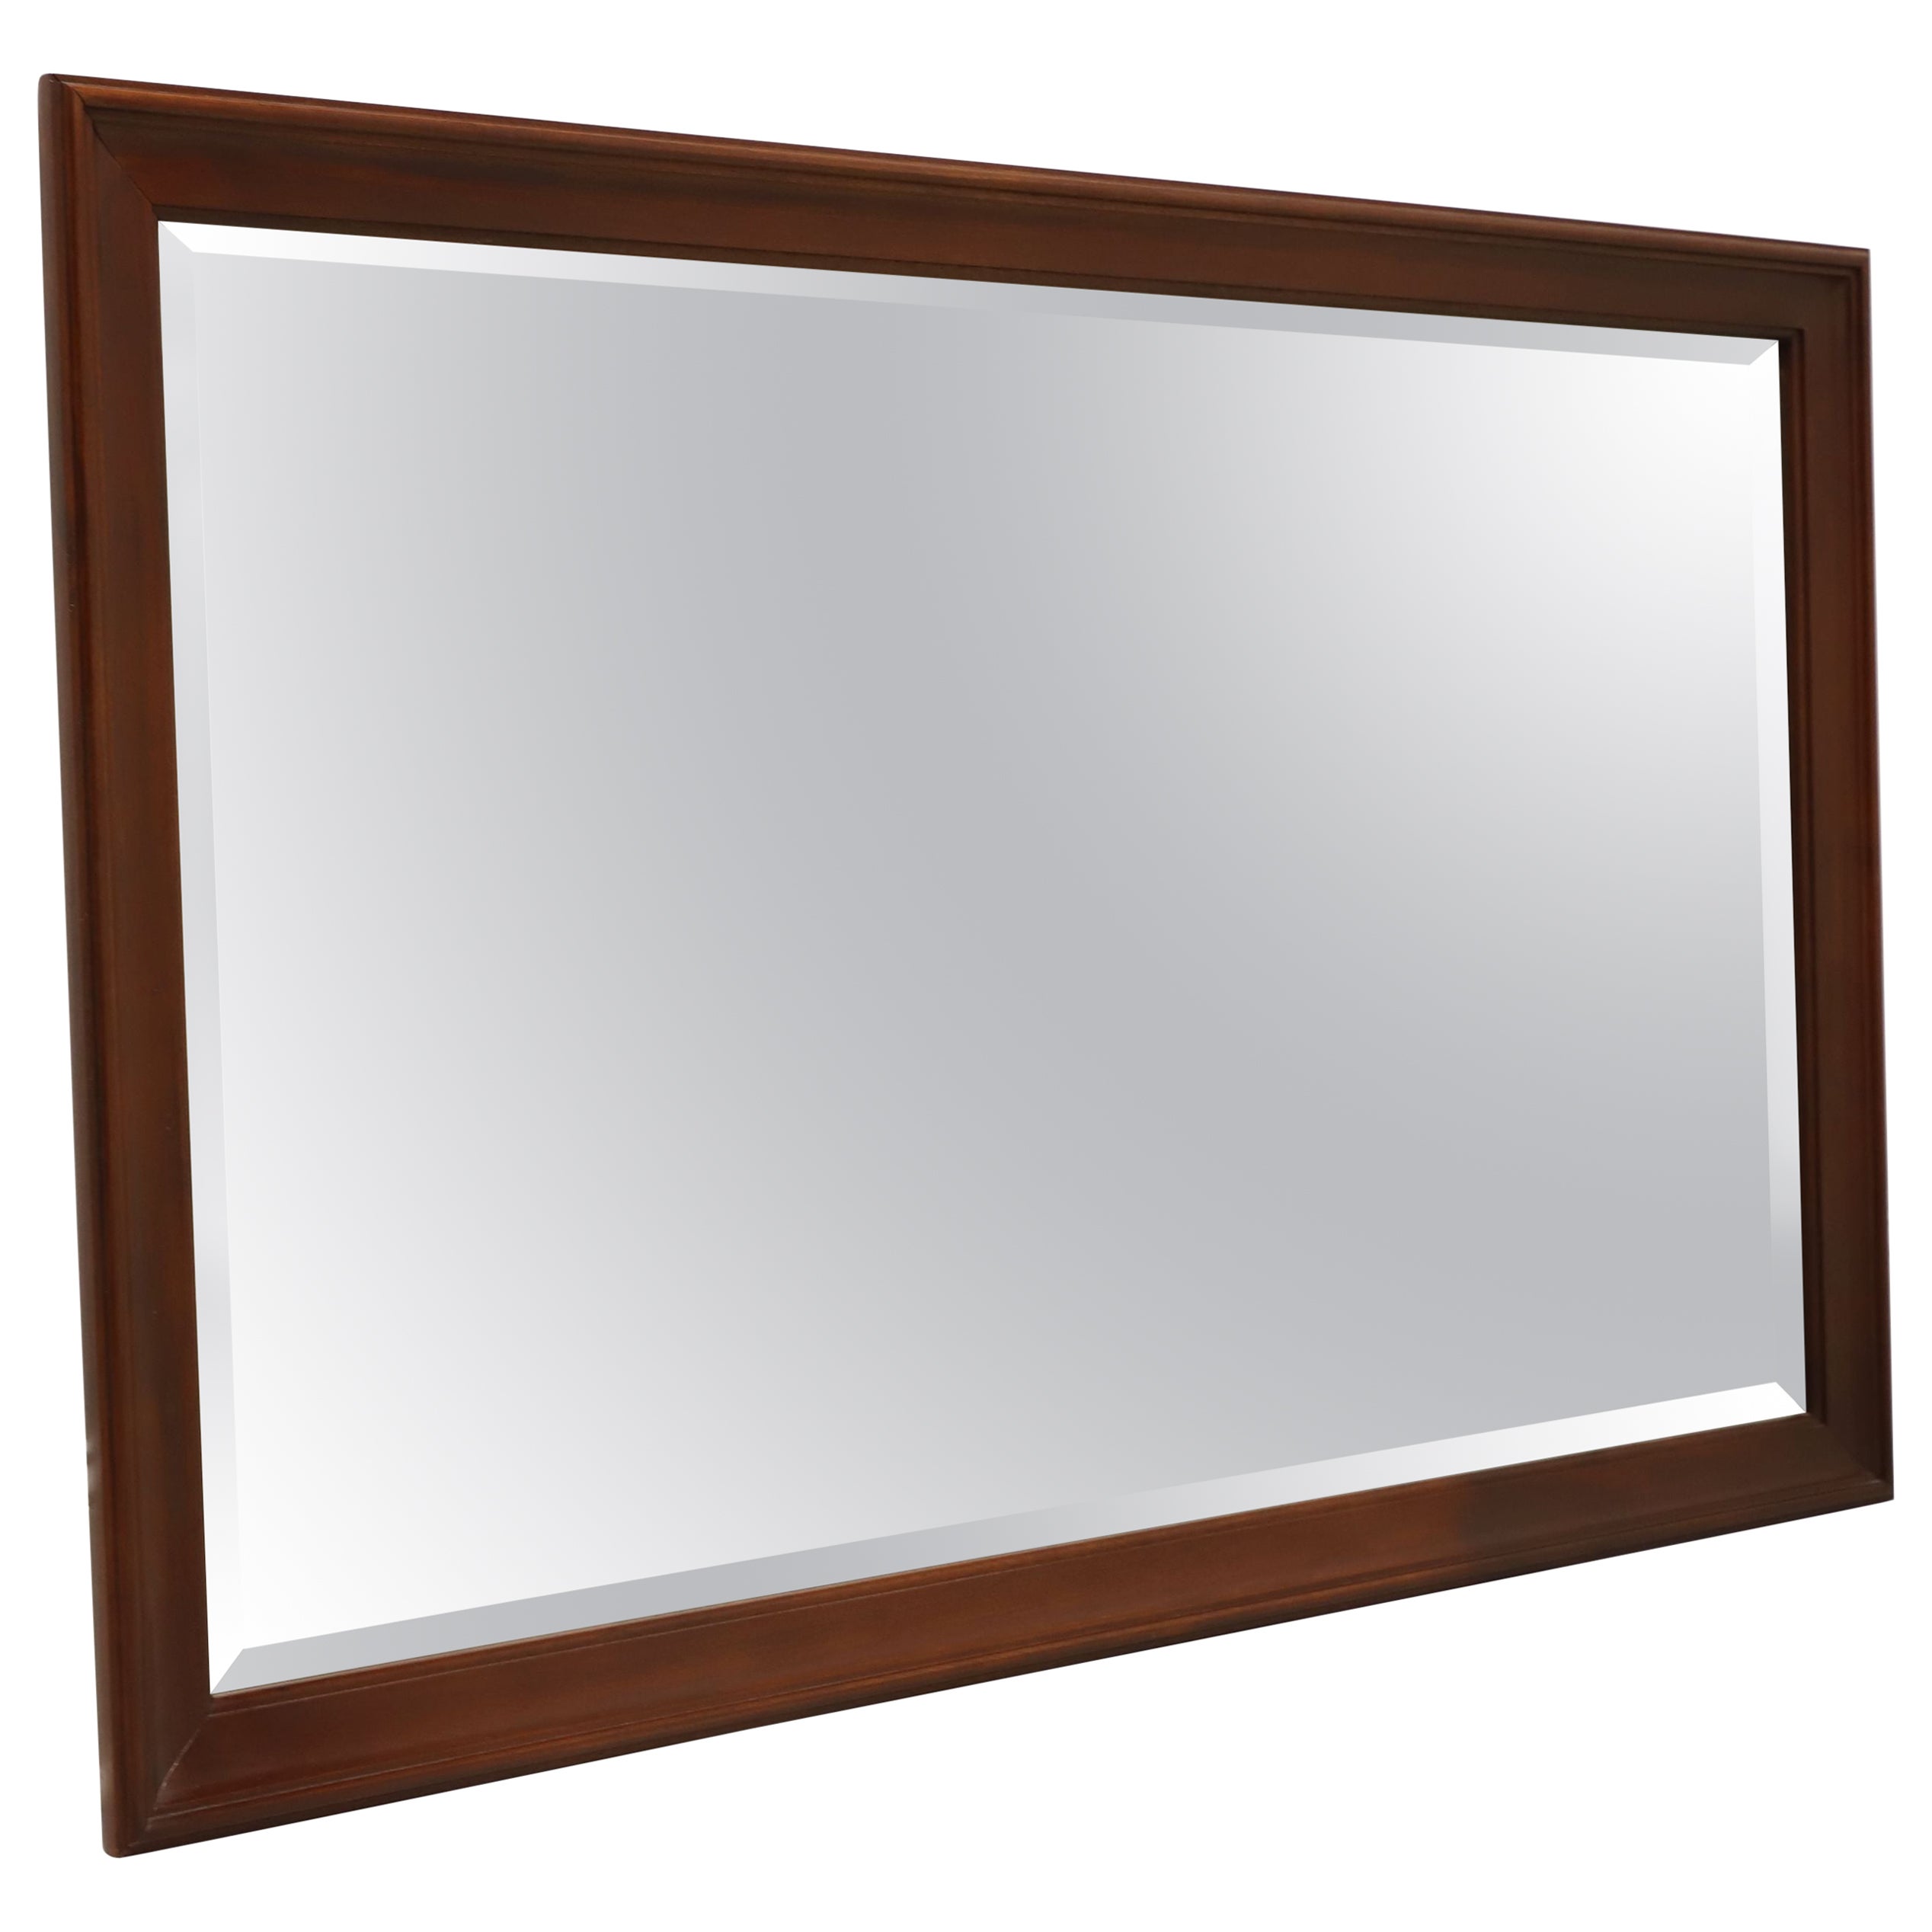 CRAFTIQUE Mellowax Solid Mahogany Rectangular Beveled Dresser / Wall Mirror